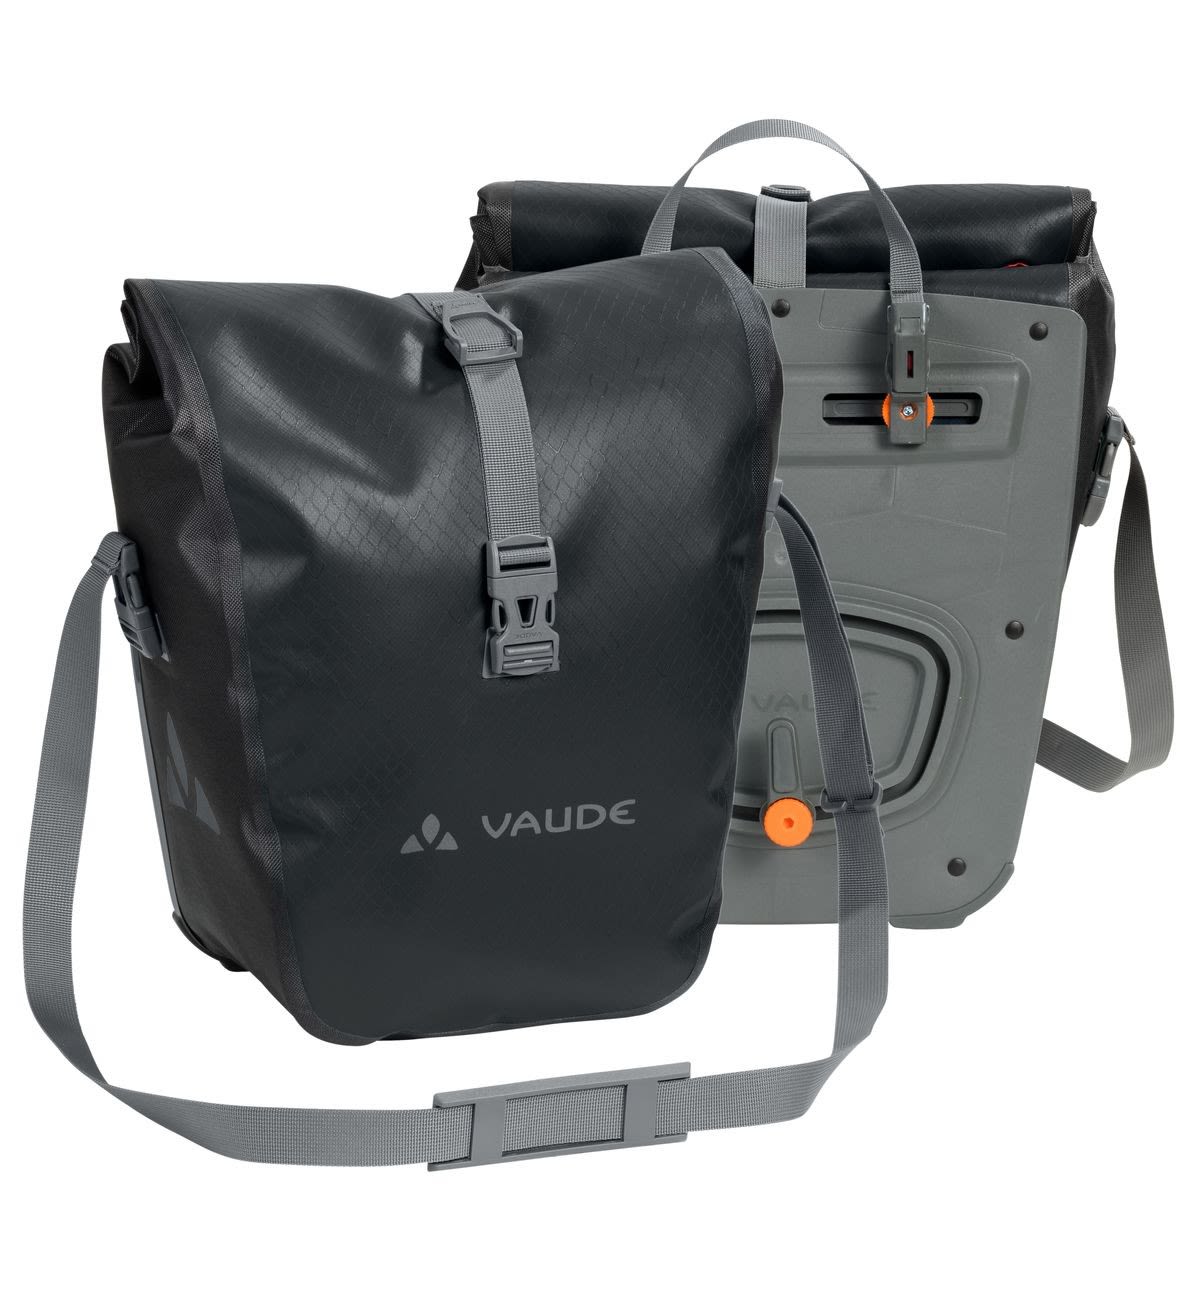 Vaude Aqua Front Schwarz- Fahrradtaschen- Grsse 28l - Farbe Black unter Vaude